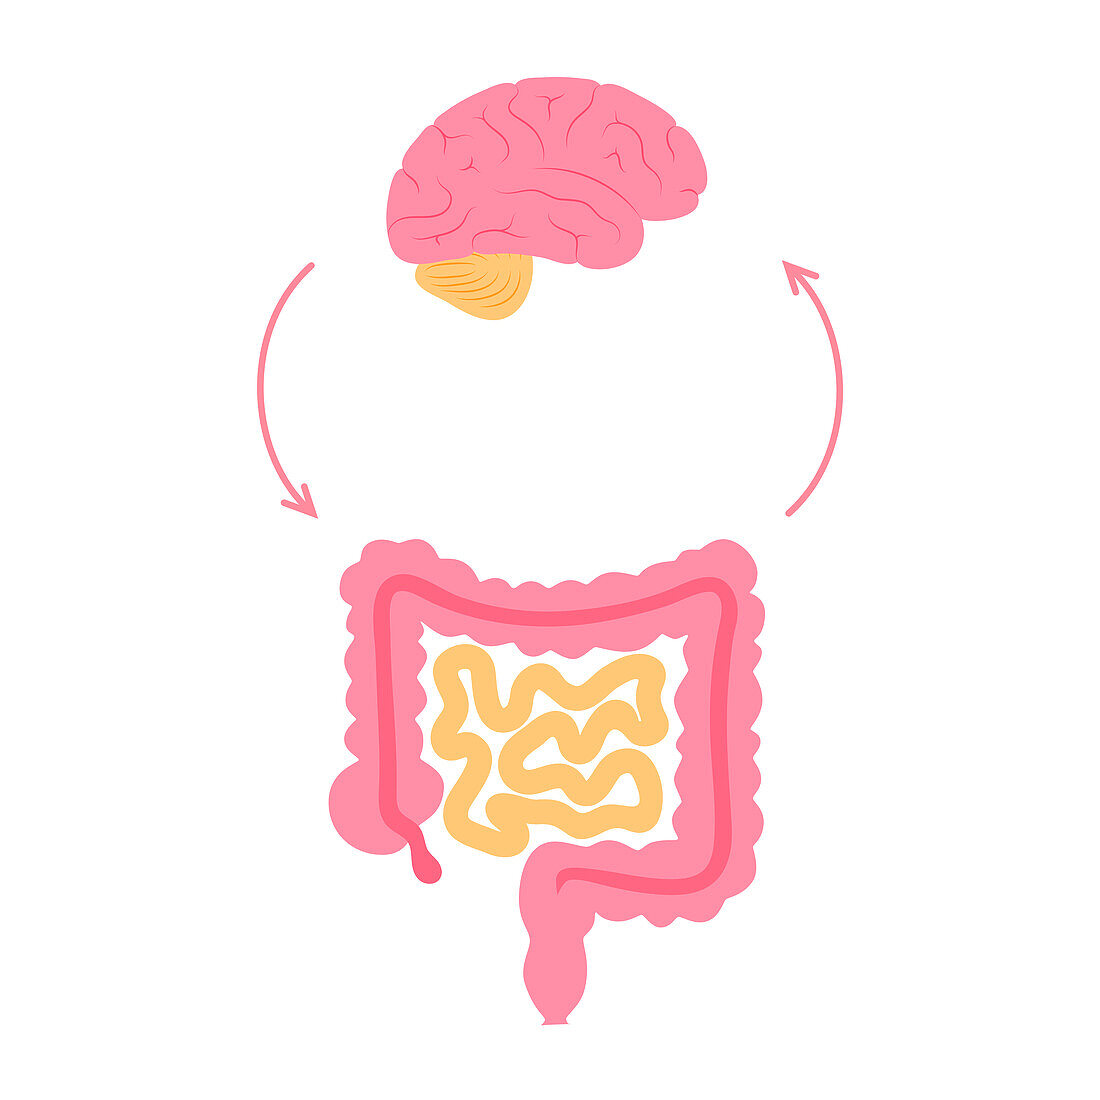 Gut brain connection, illustration